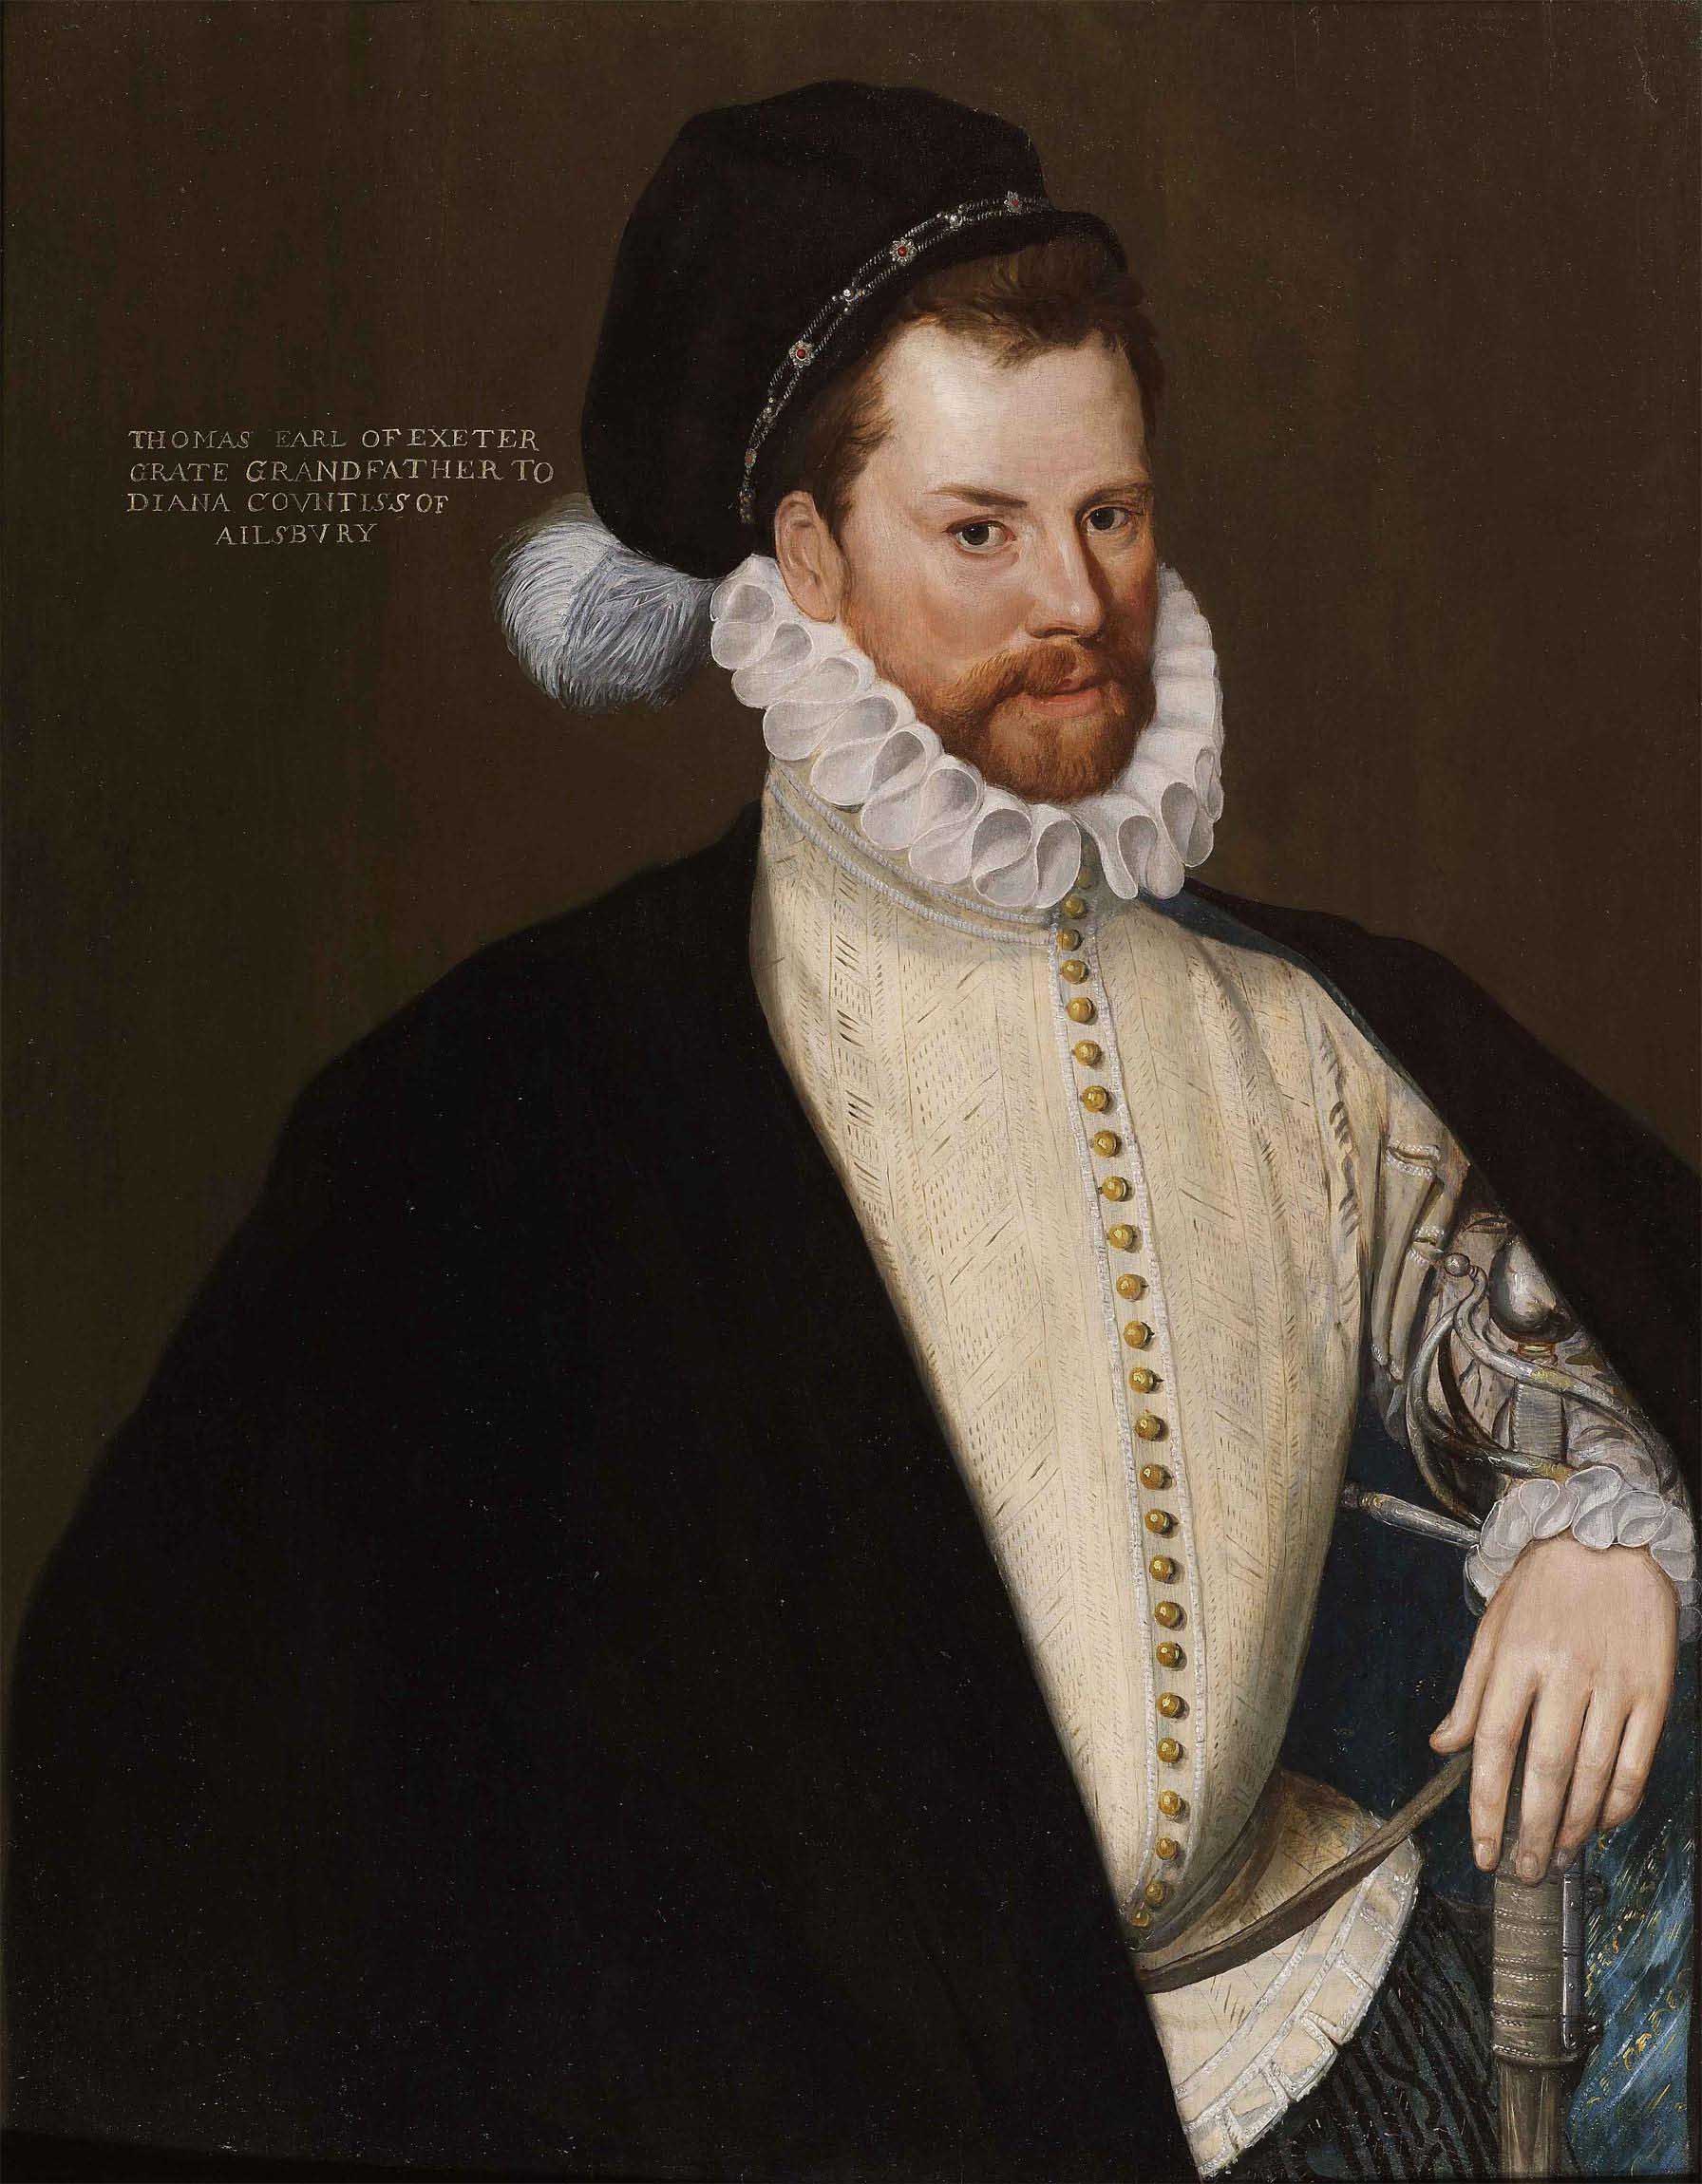 Sir Thomas Cecil